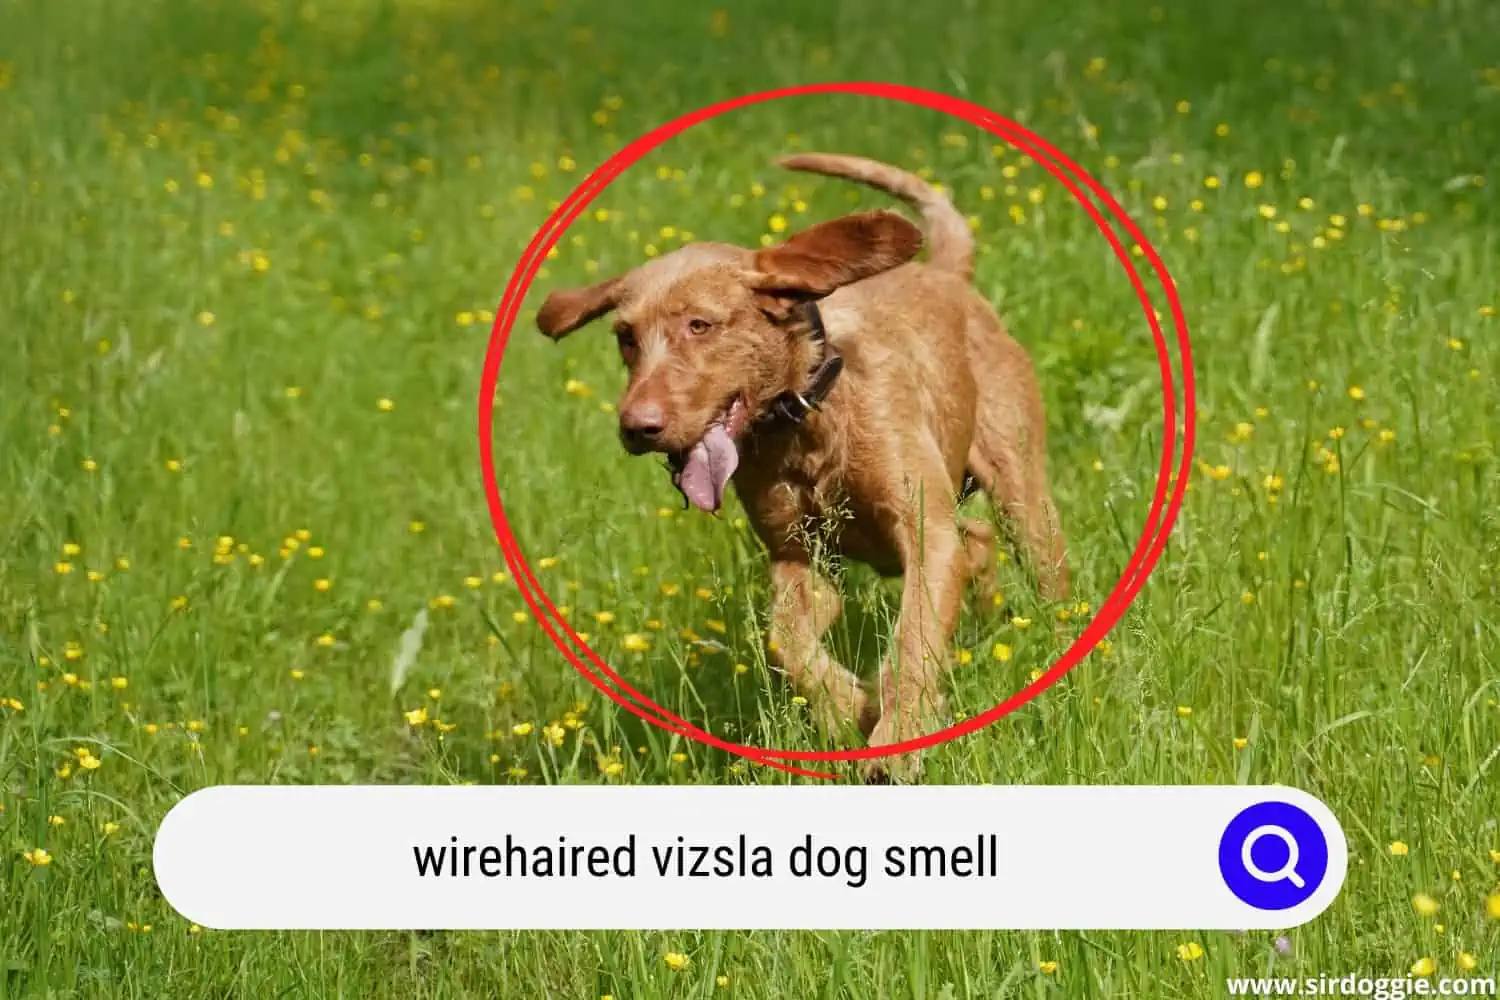 Wirehaired Vizsla dog running in the grass field 